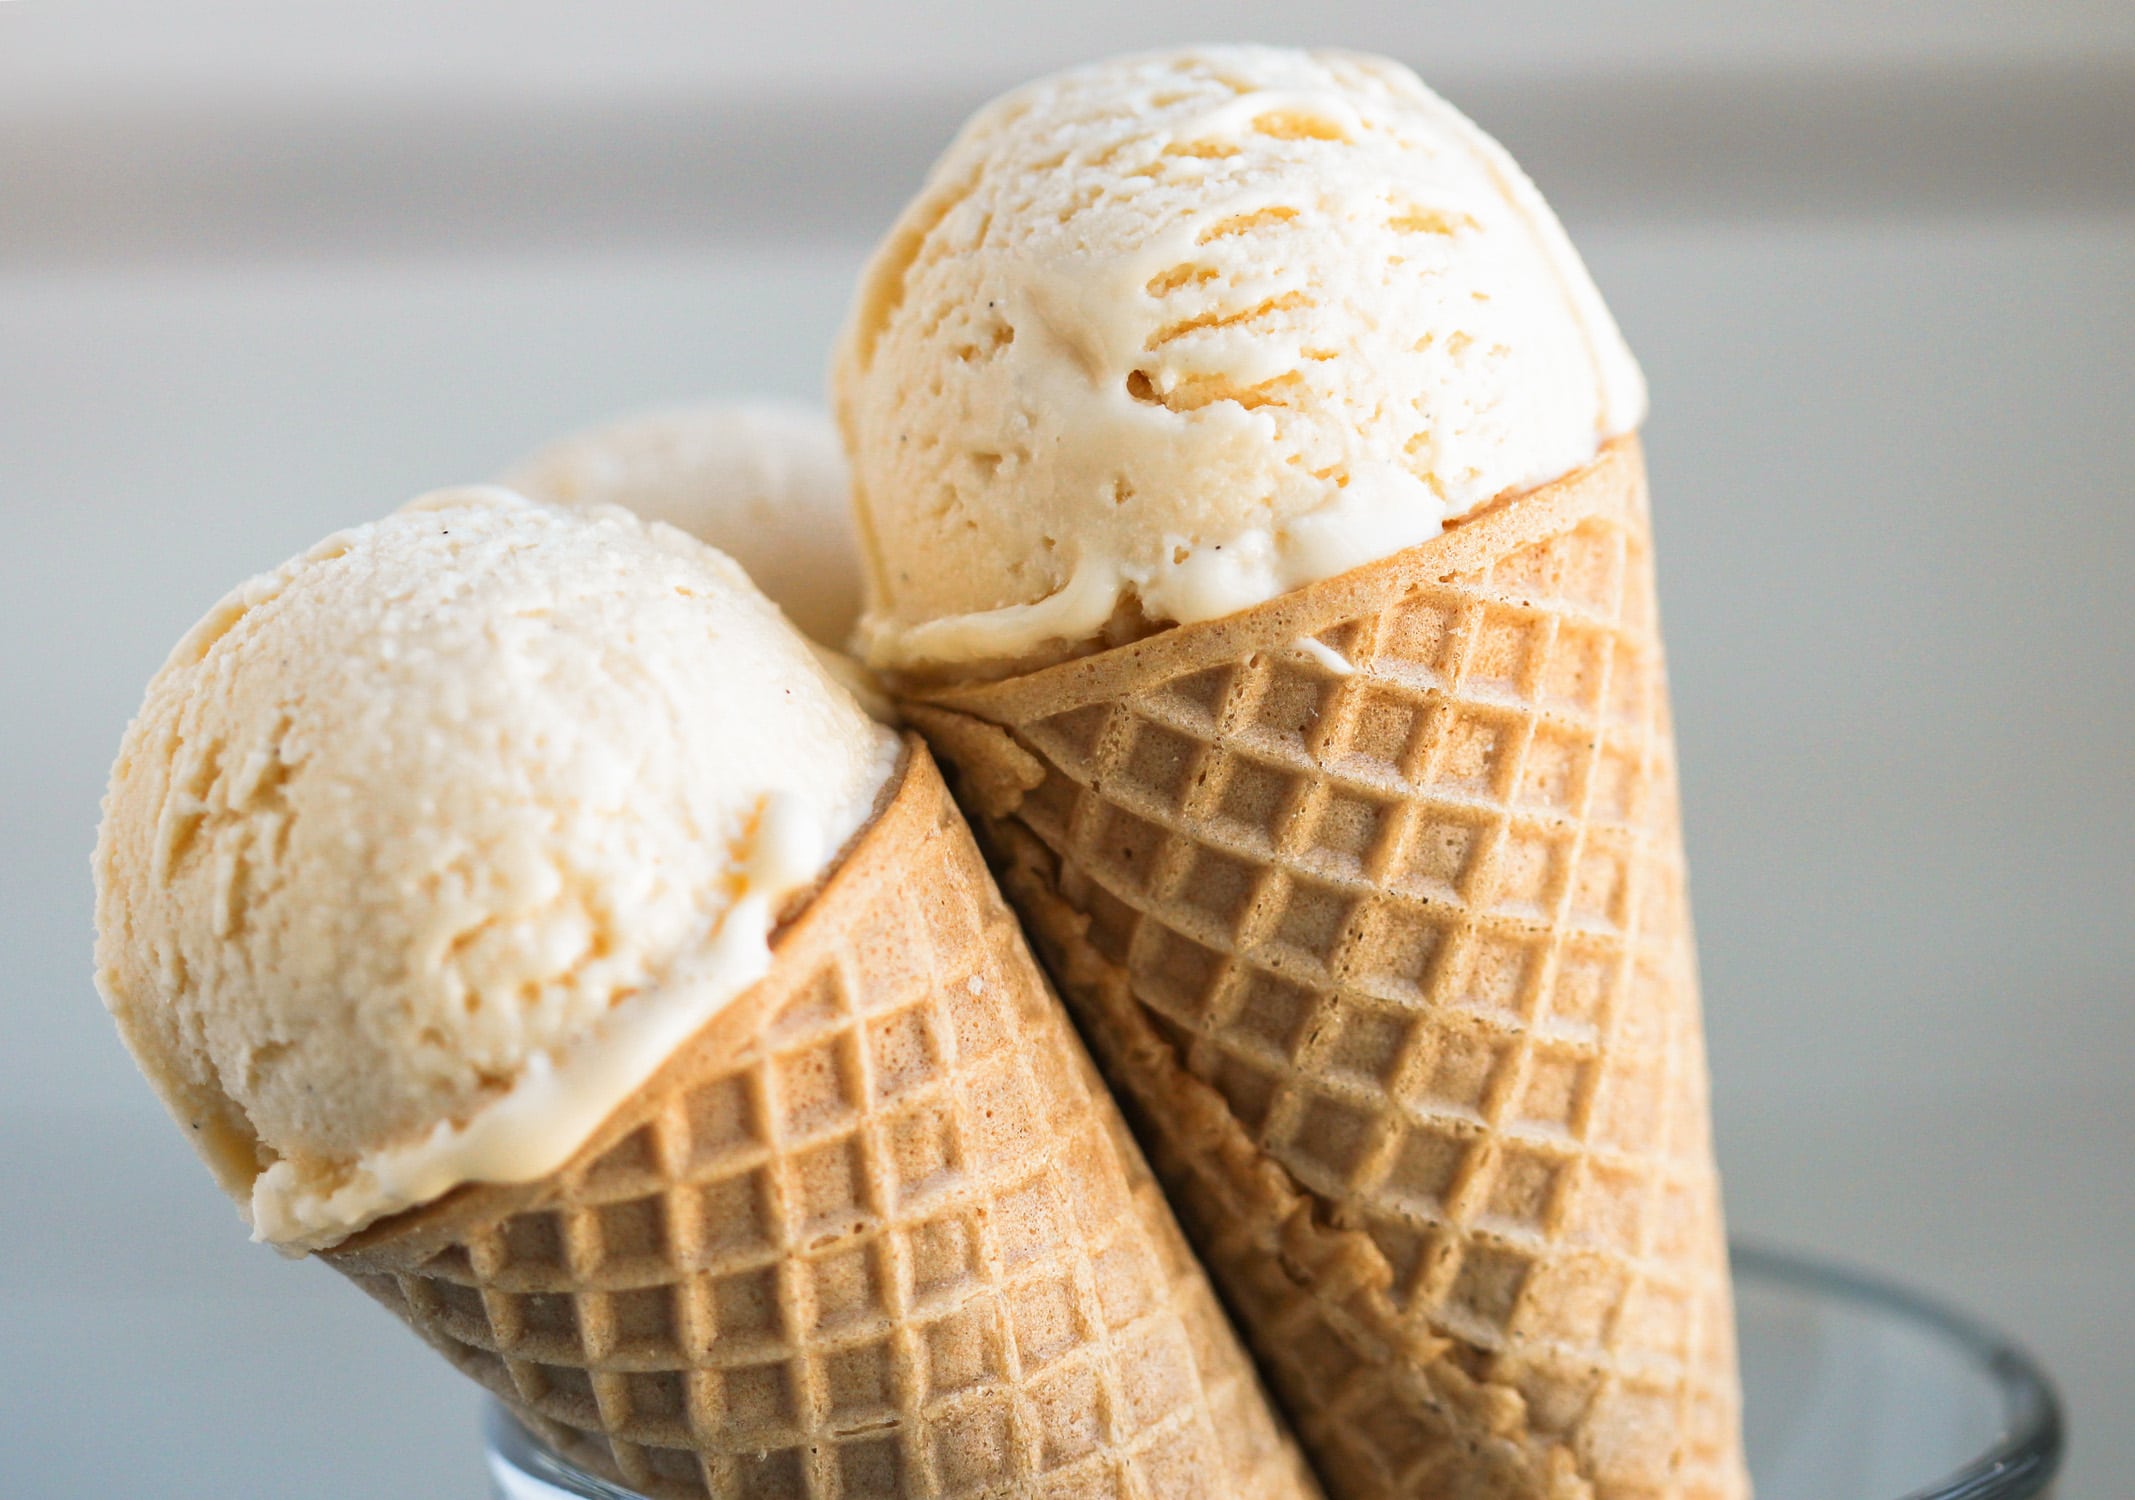 Is Vanilla Ice Cream Healthy: Exploring the Health Benefits of Vanilla Ice Cream